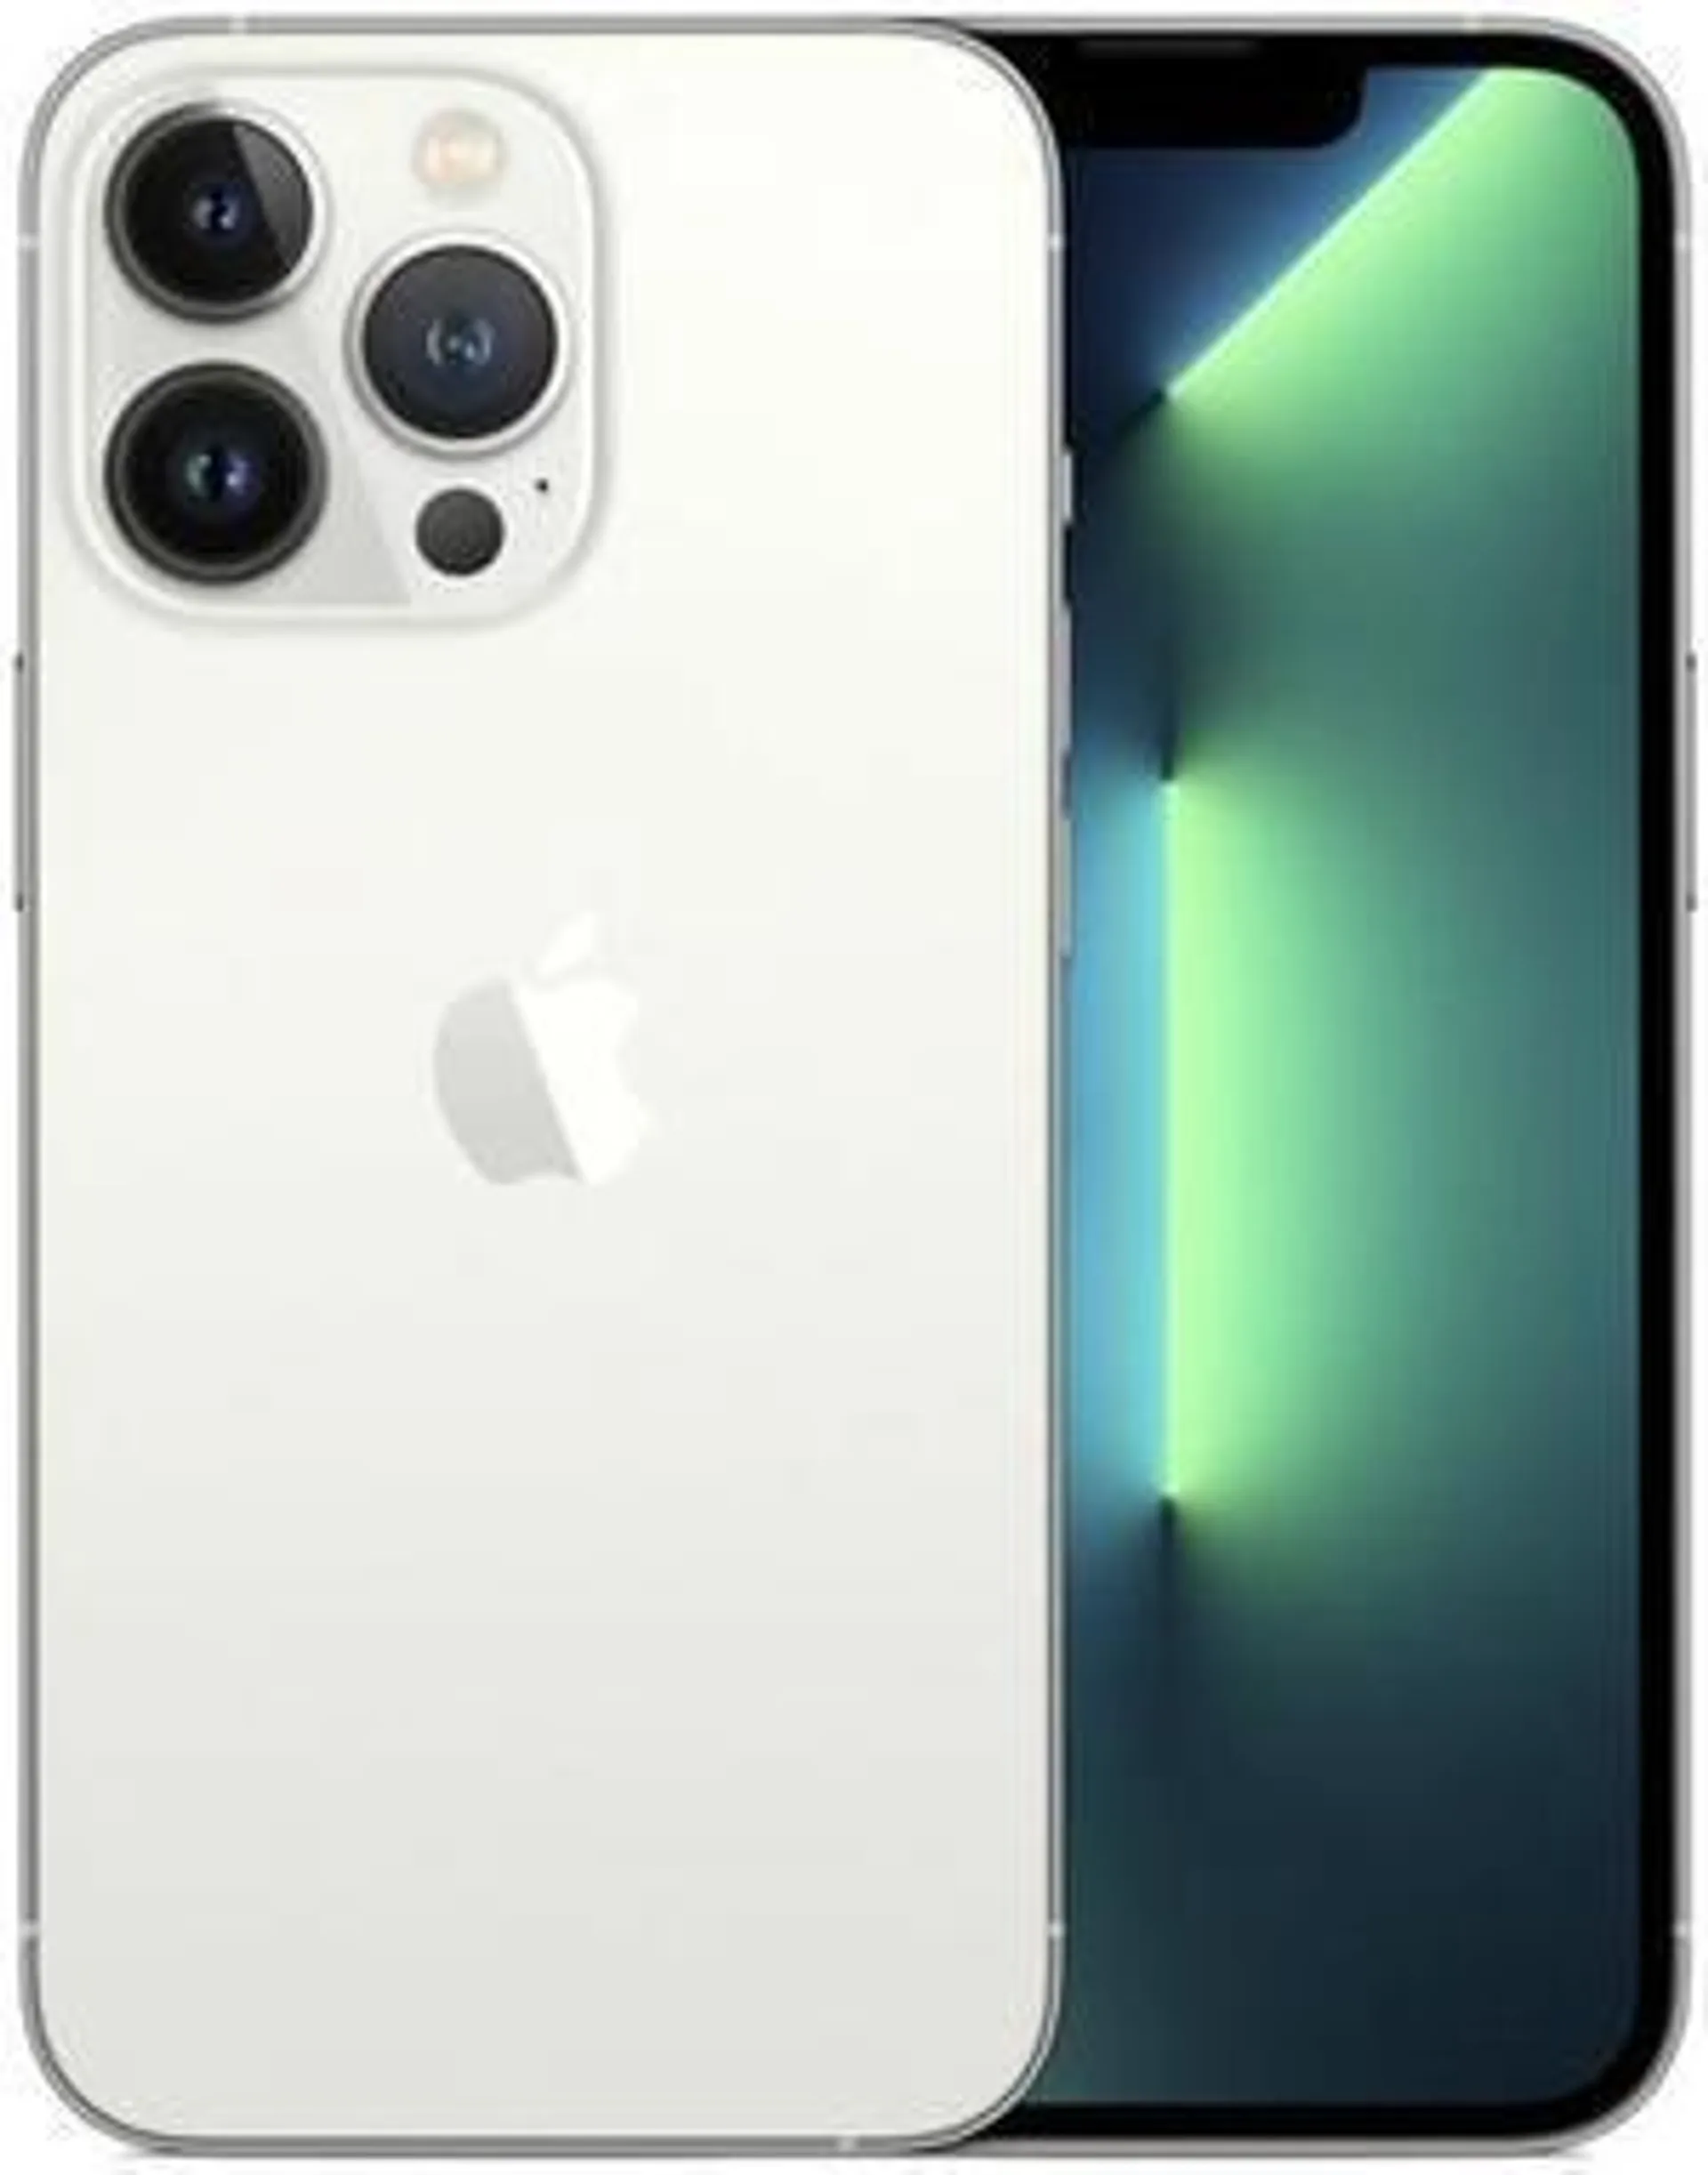 Apple iPhone 13 Pro 256GB Silver - MLTX3LL/A - Grade A